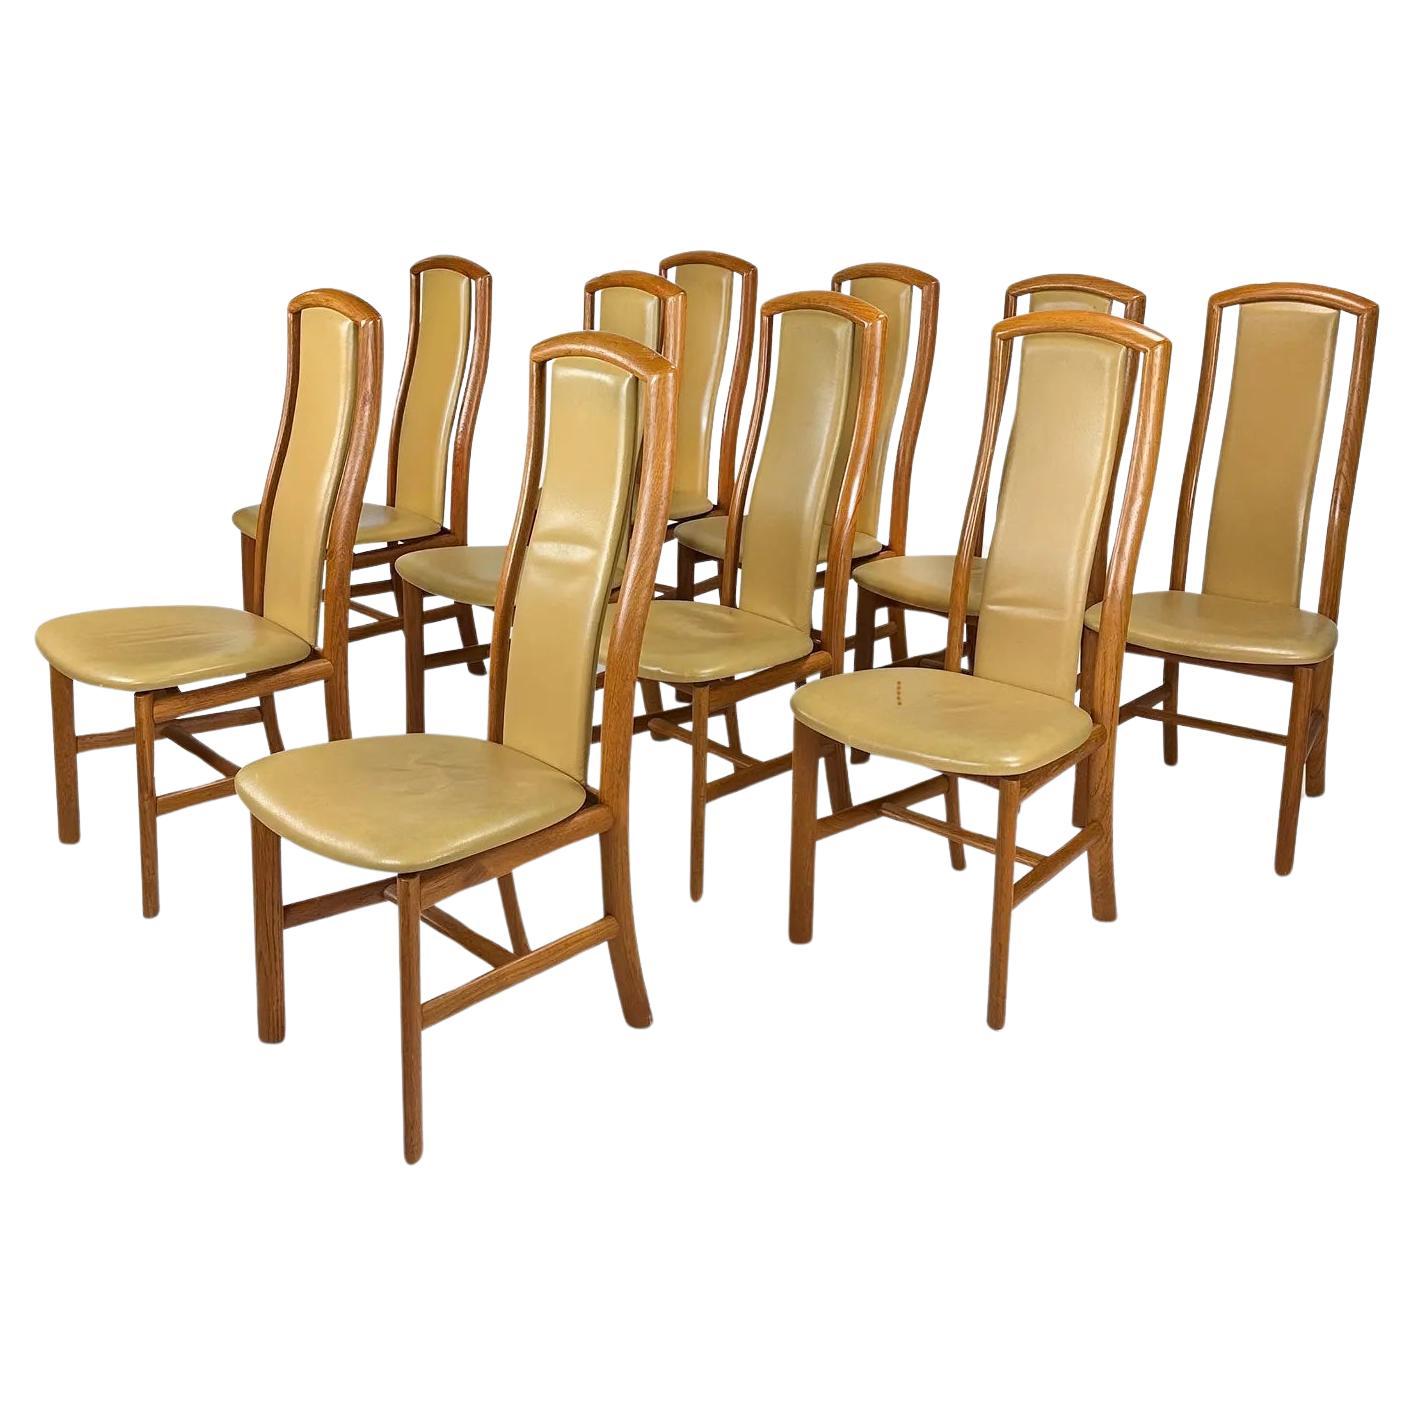 Skovby Danish Modern Teak High Back Dining Chairs - Set of 10 For Sale